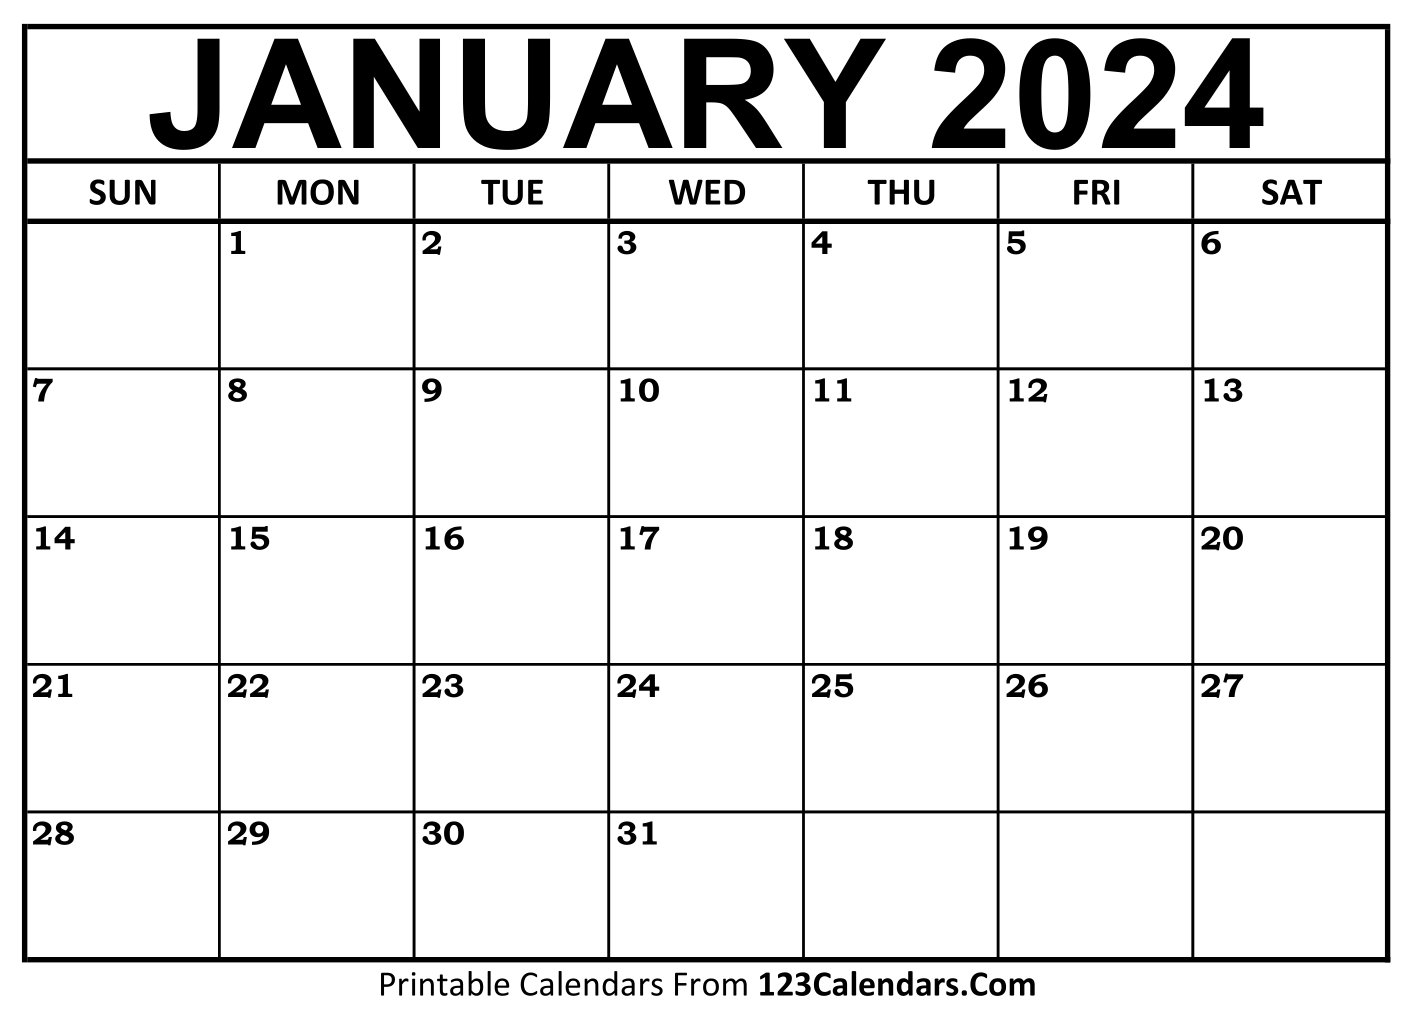 Printable January 2024 Calendar Templates - 123Calendars for Free Printable January 2024 Calendar